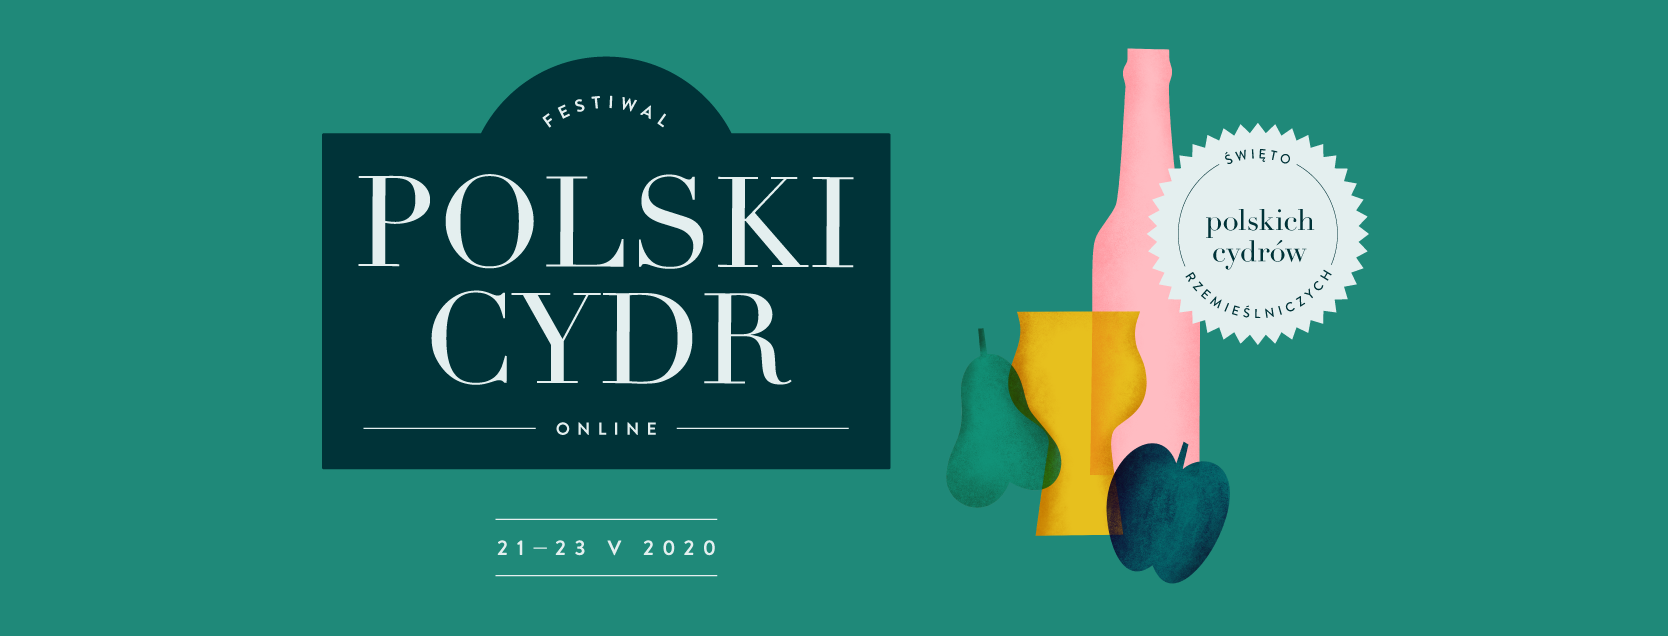 Pierwszy Festiwal Polski Cydr on-line